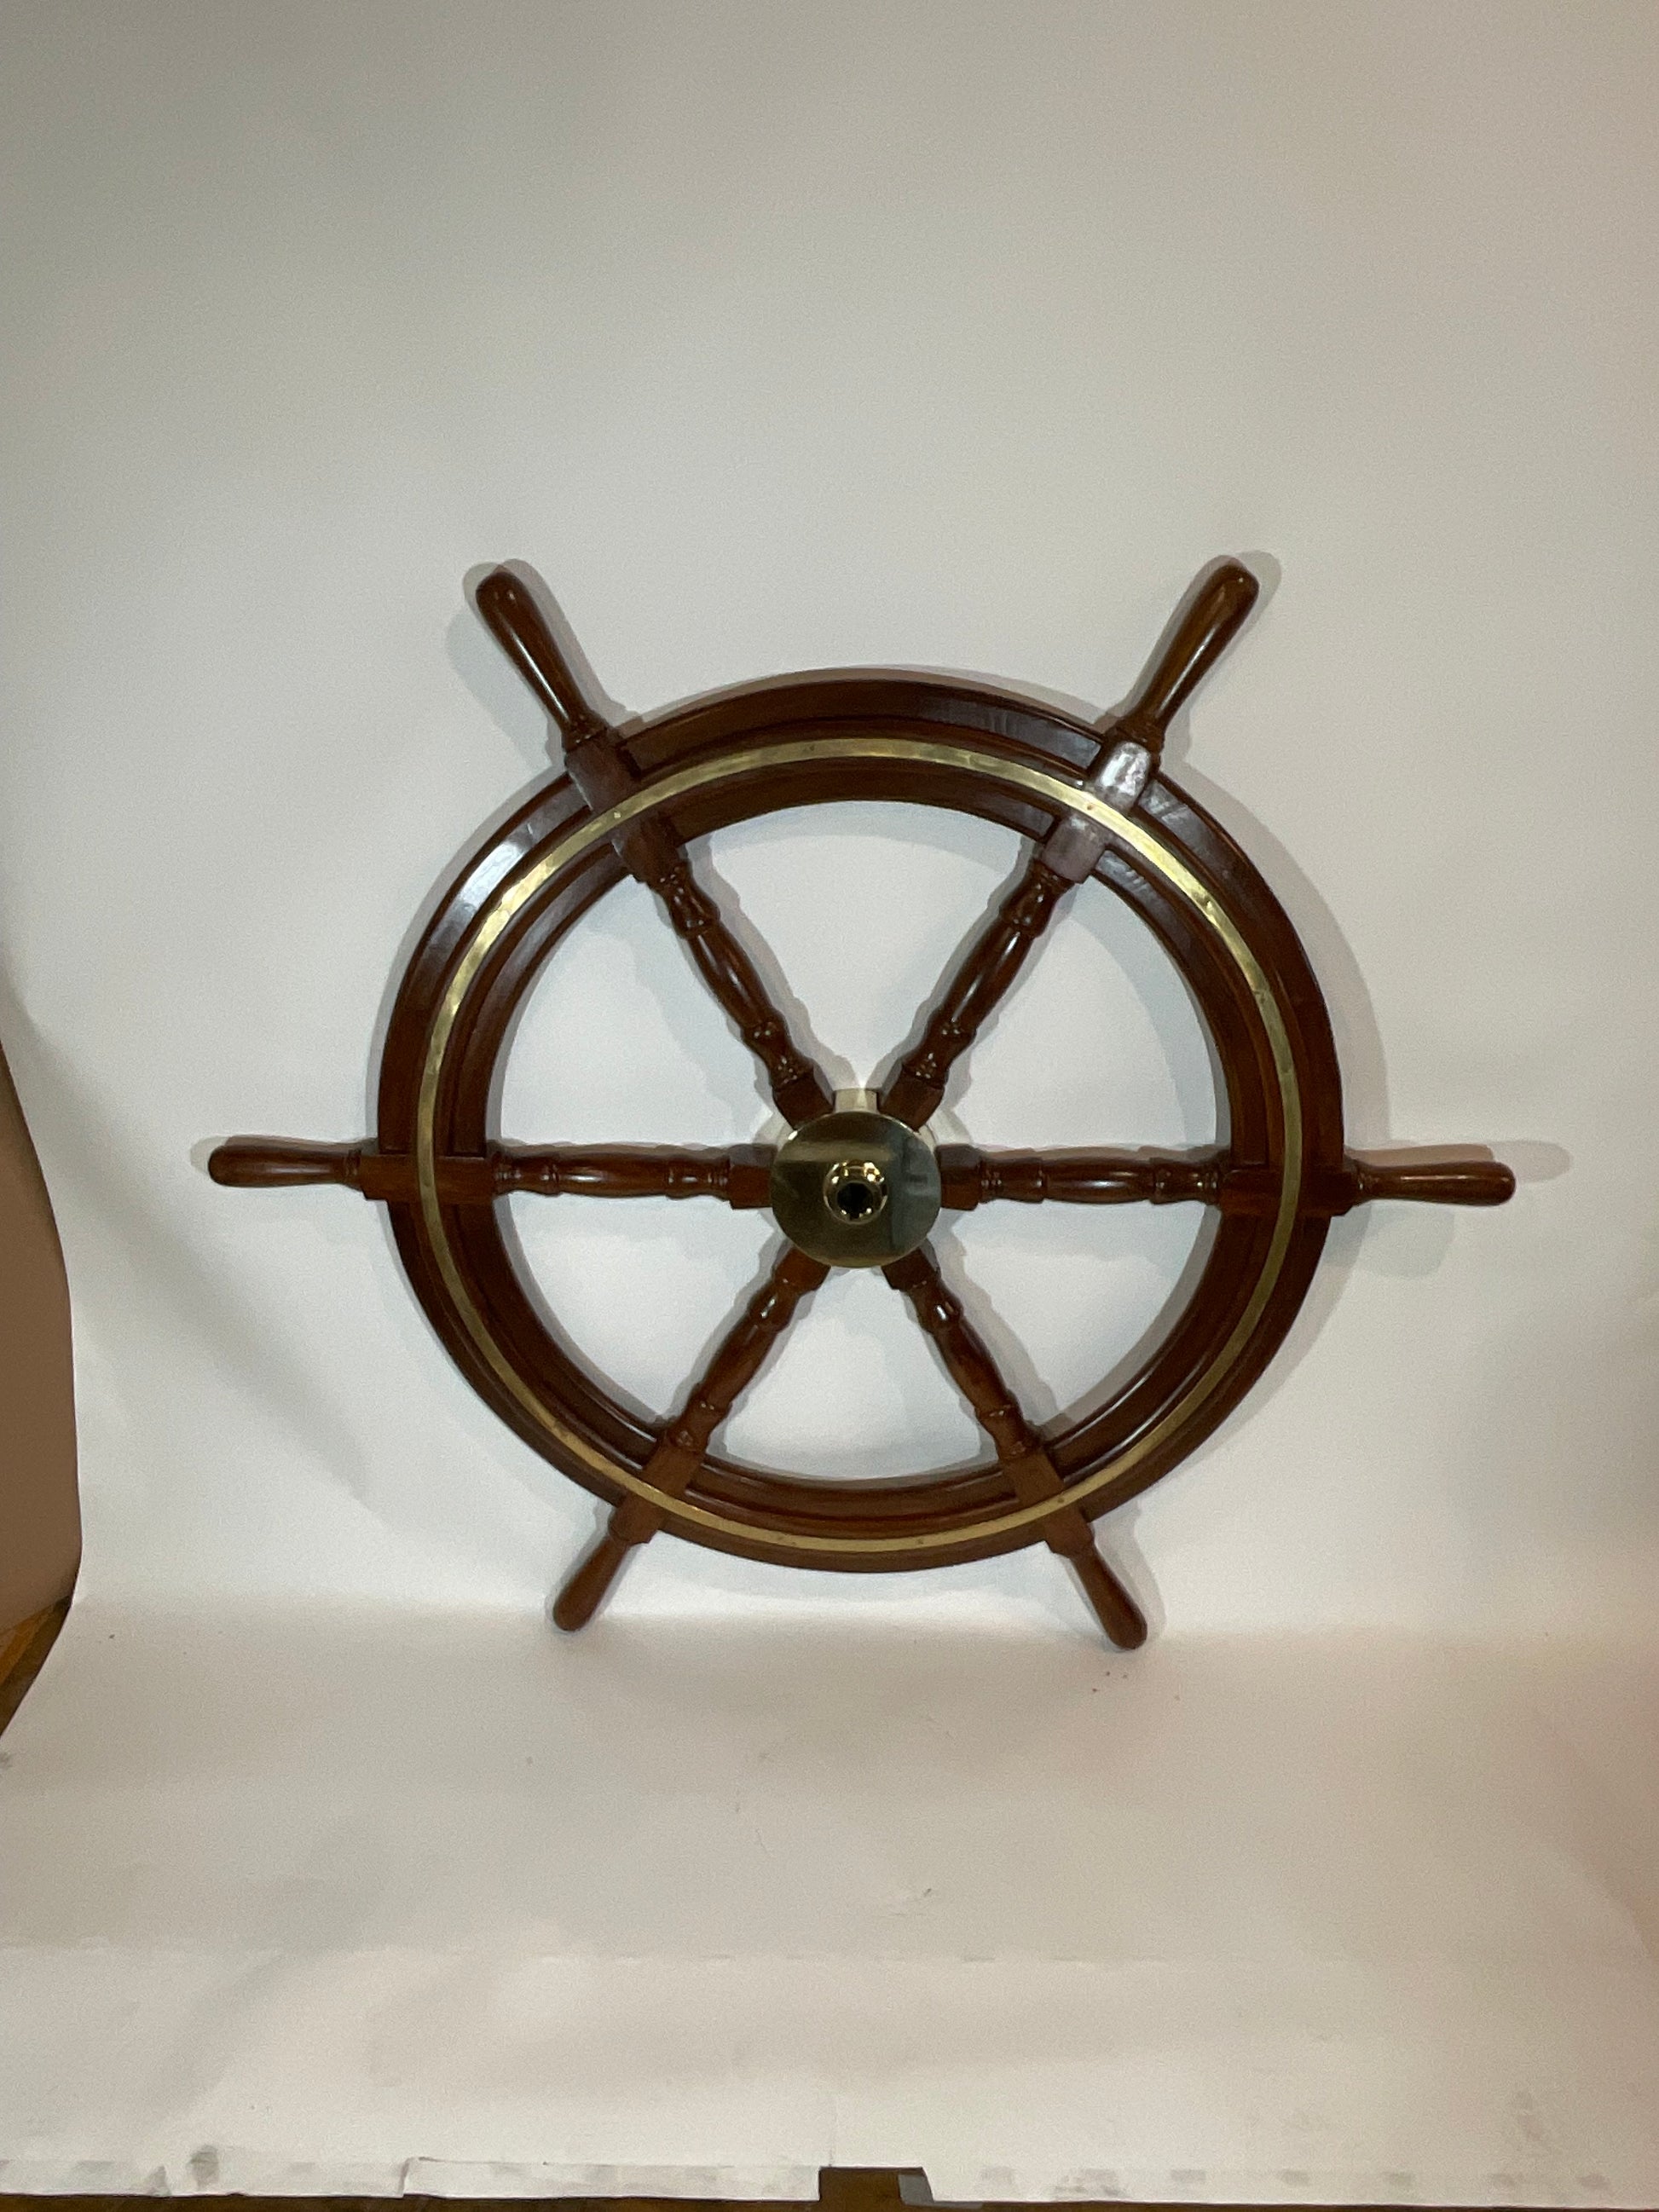 Six Foot Antique Ships Wheel - Lannan Gallery